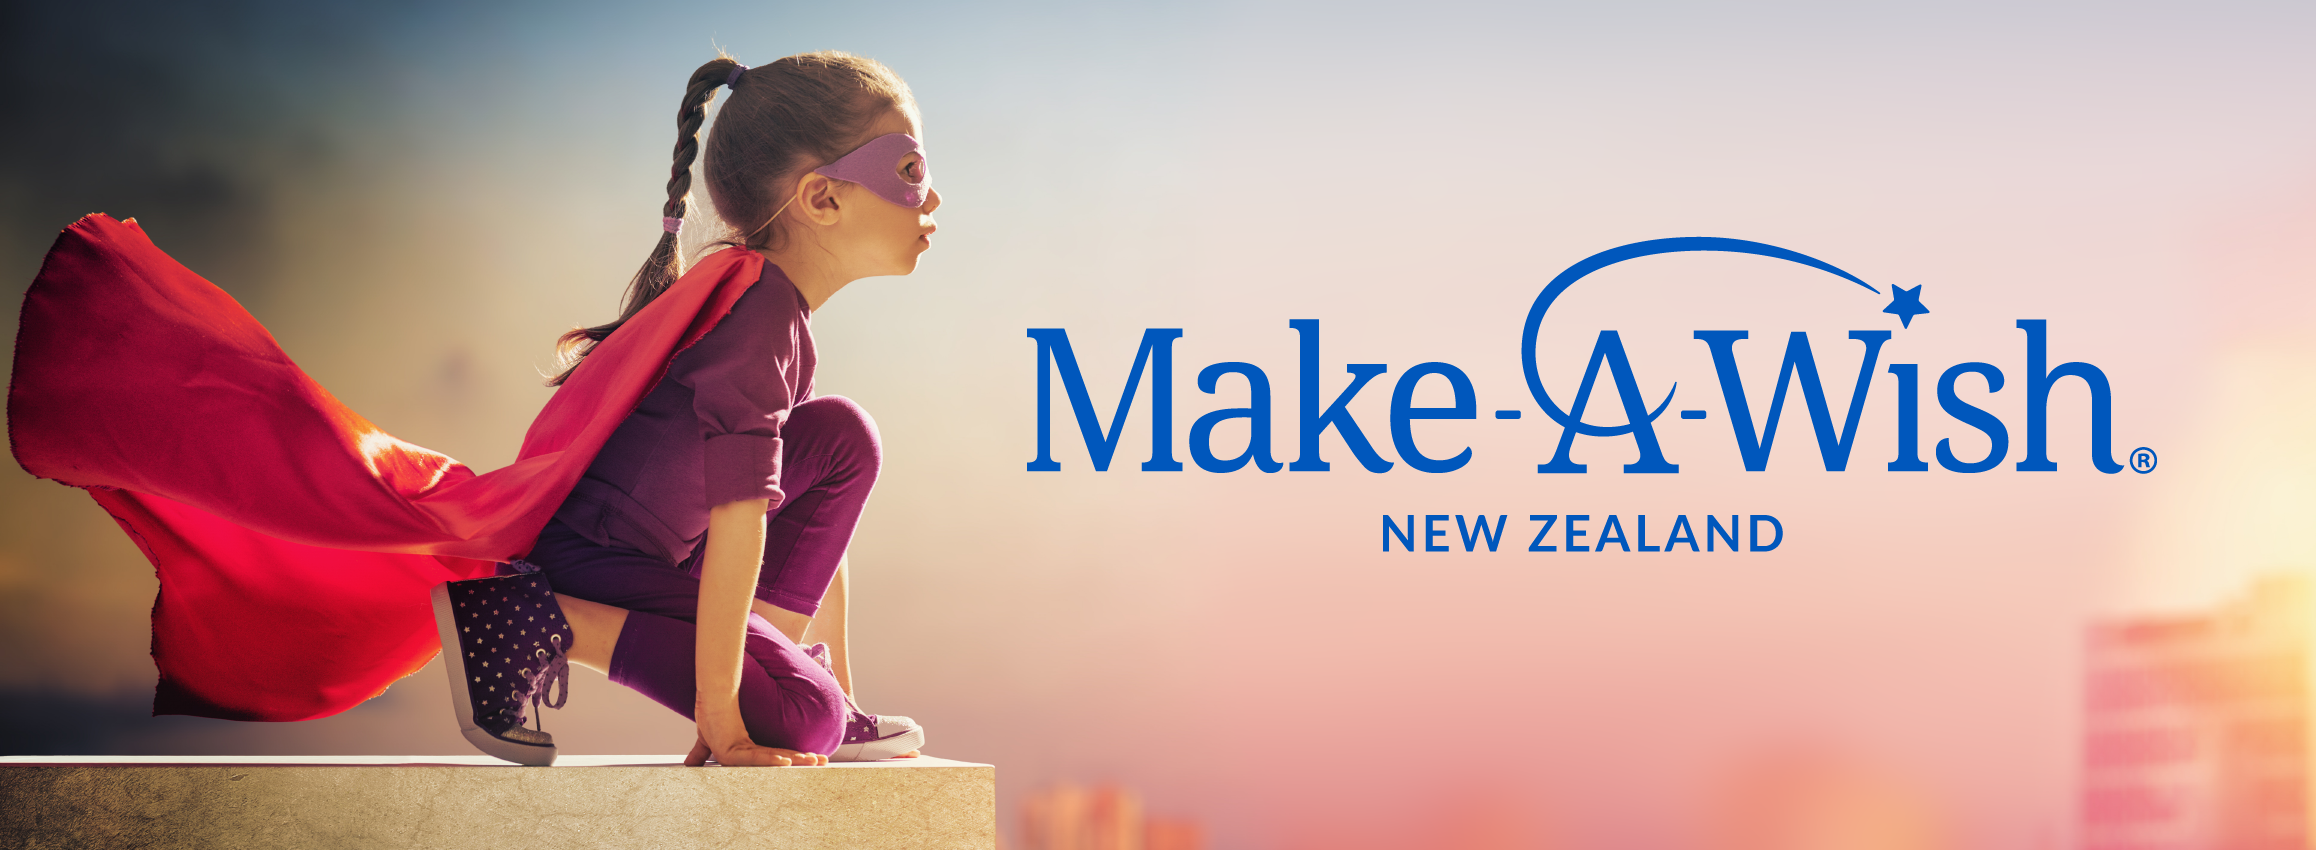 New Client Update: Make-A-Wish New Zealand